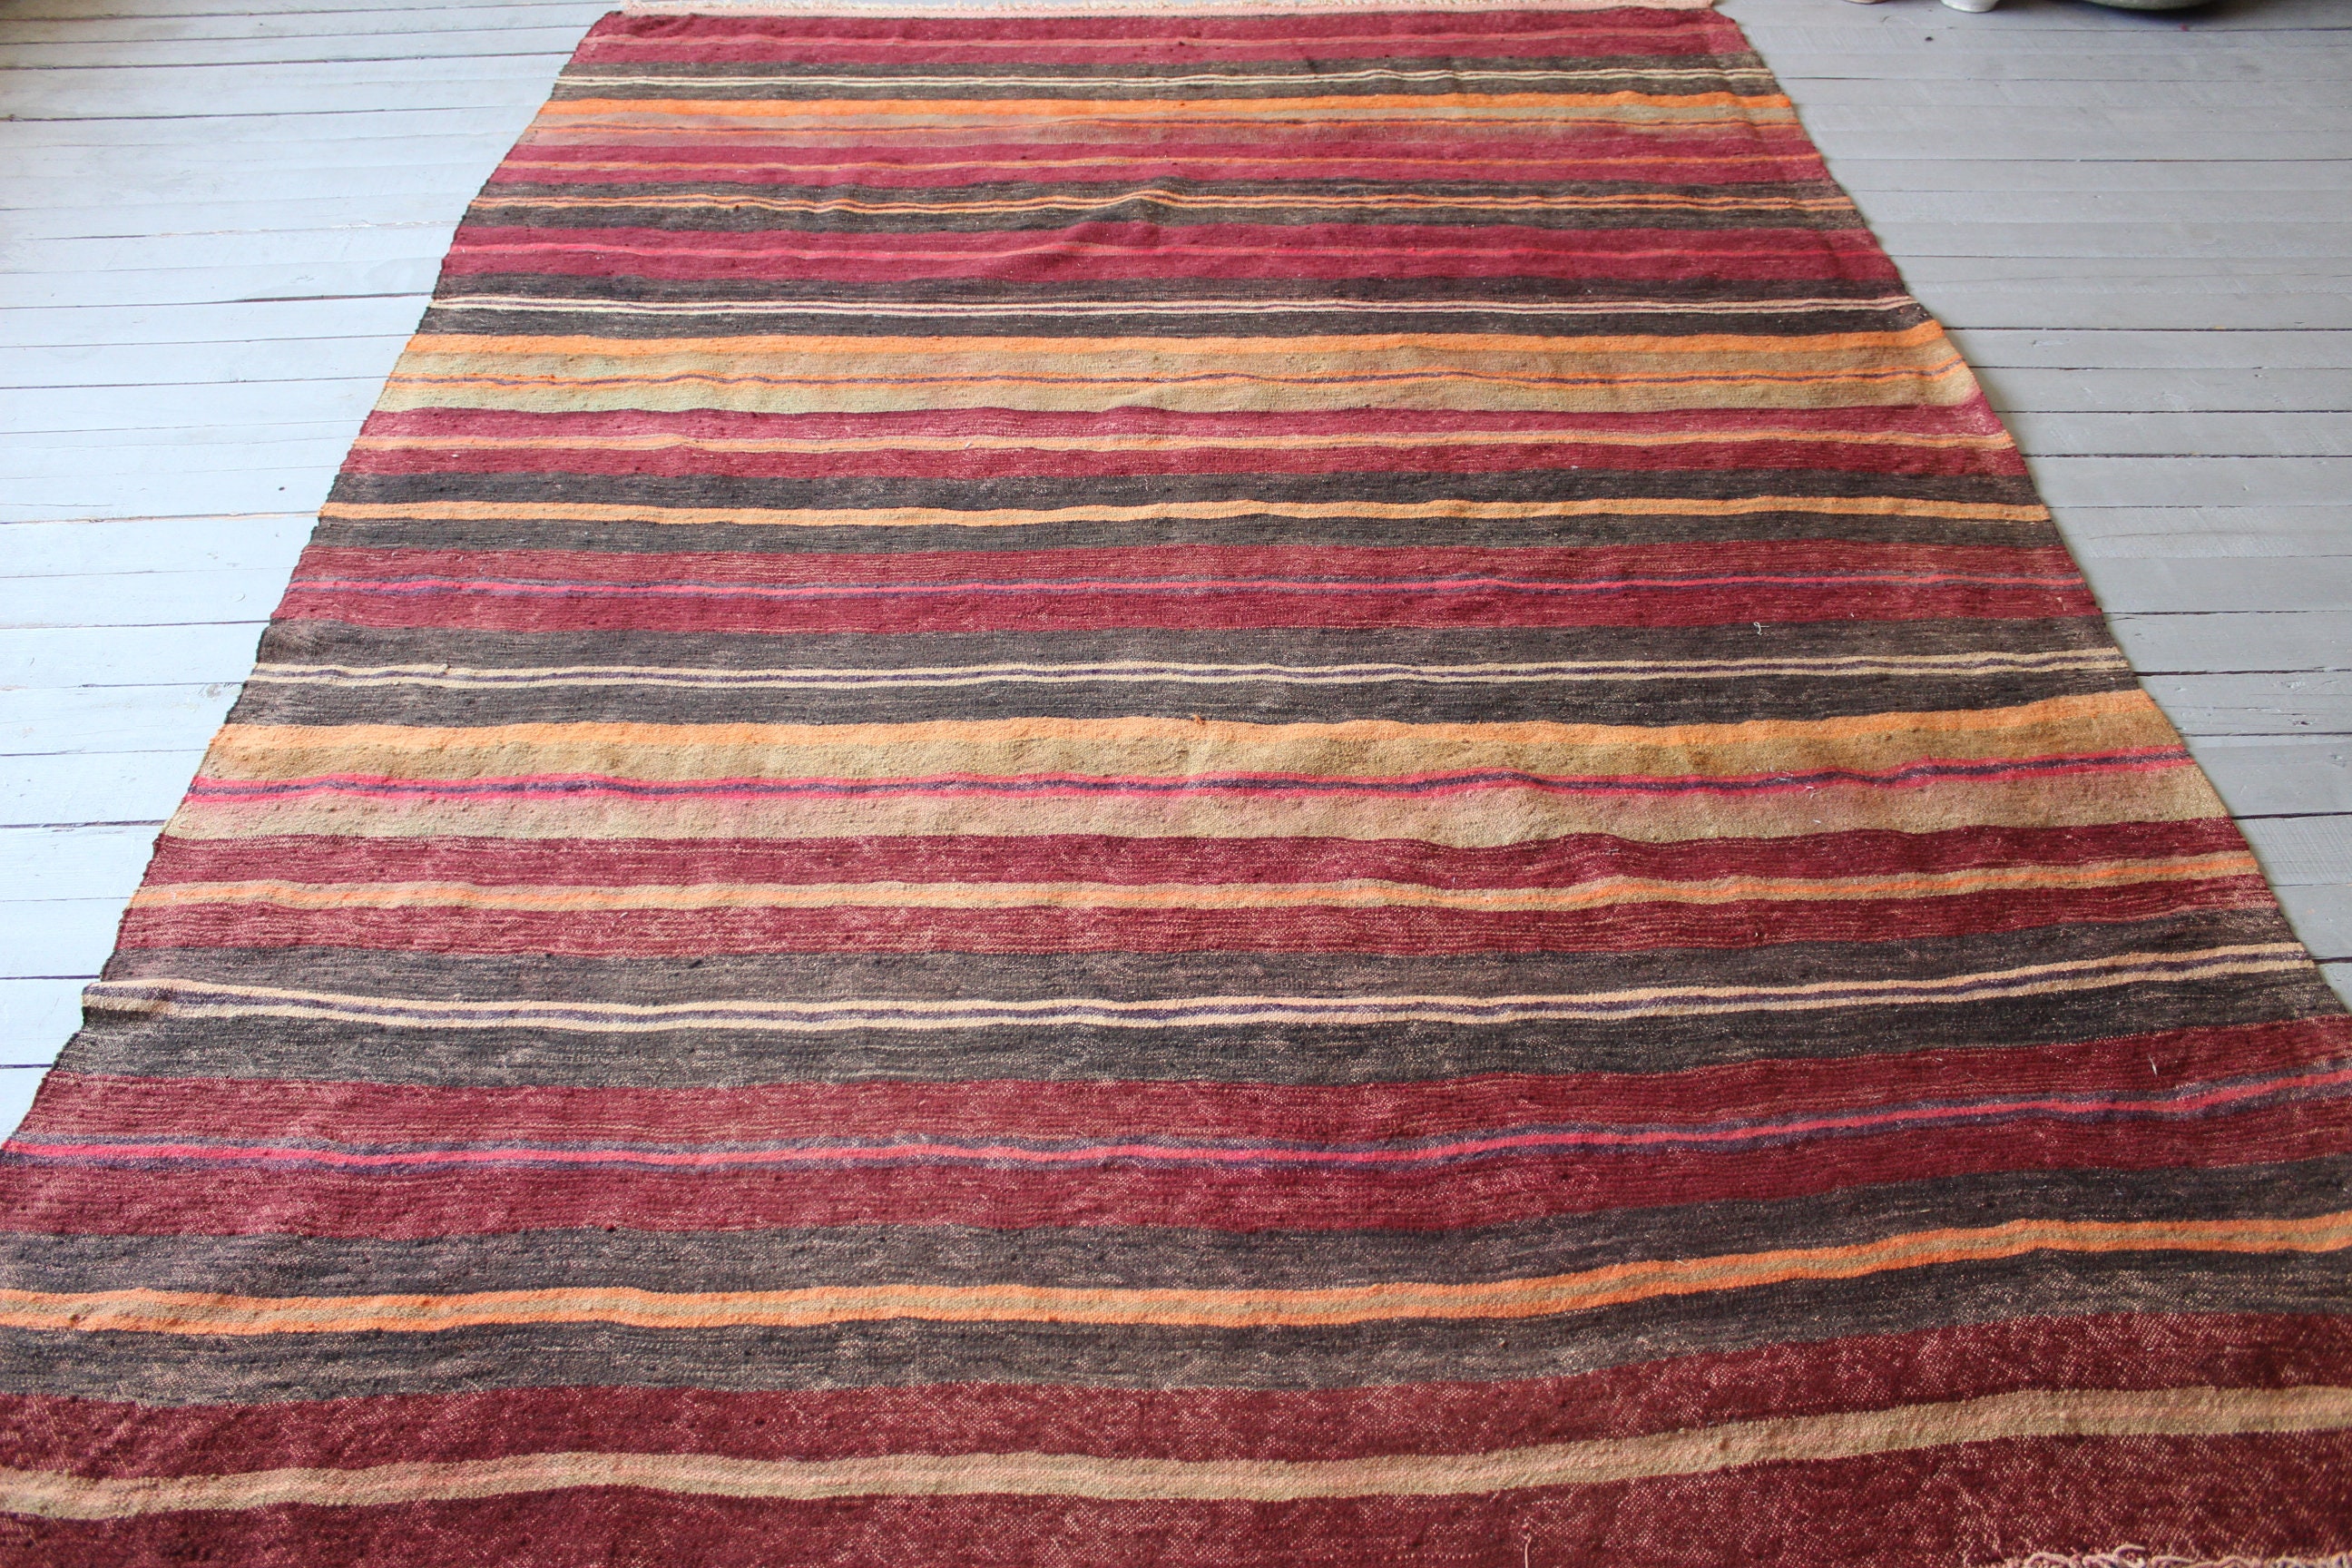 Turkish Striped Kilim , Ethnic Handwoven Wool Kilim, Bohemian Rug 6'2x8'4 Feet Free Shipping"